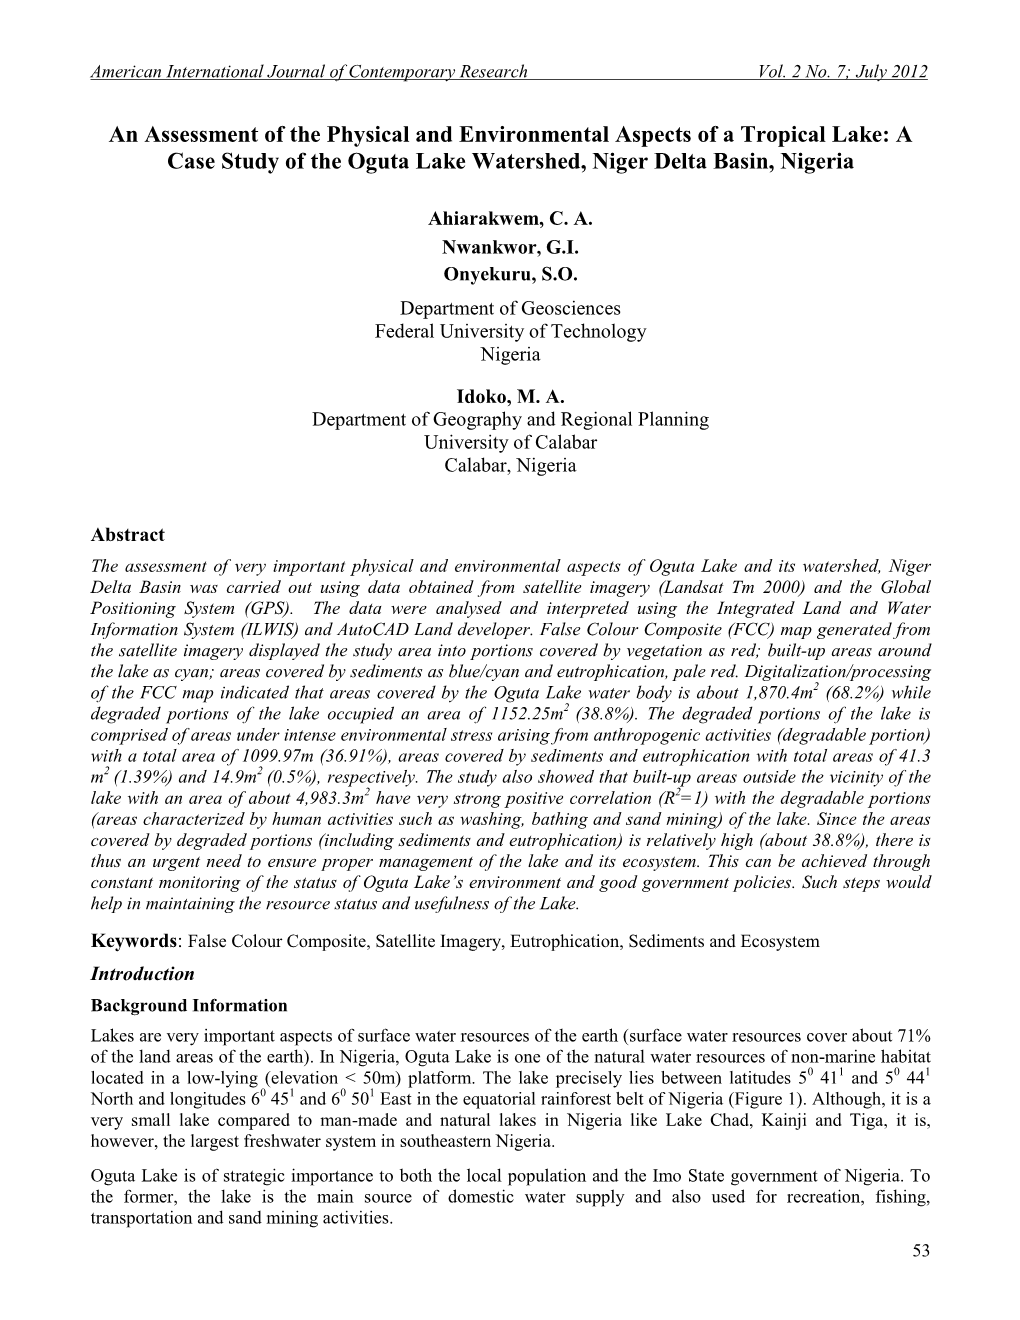 A Case Study of the Oguta Lake Watershed, Niger Delta Basin, Nigeria